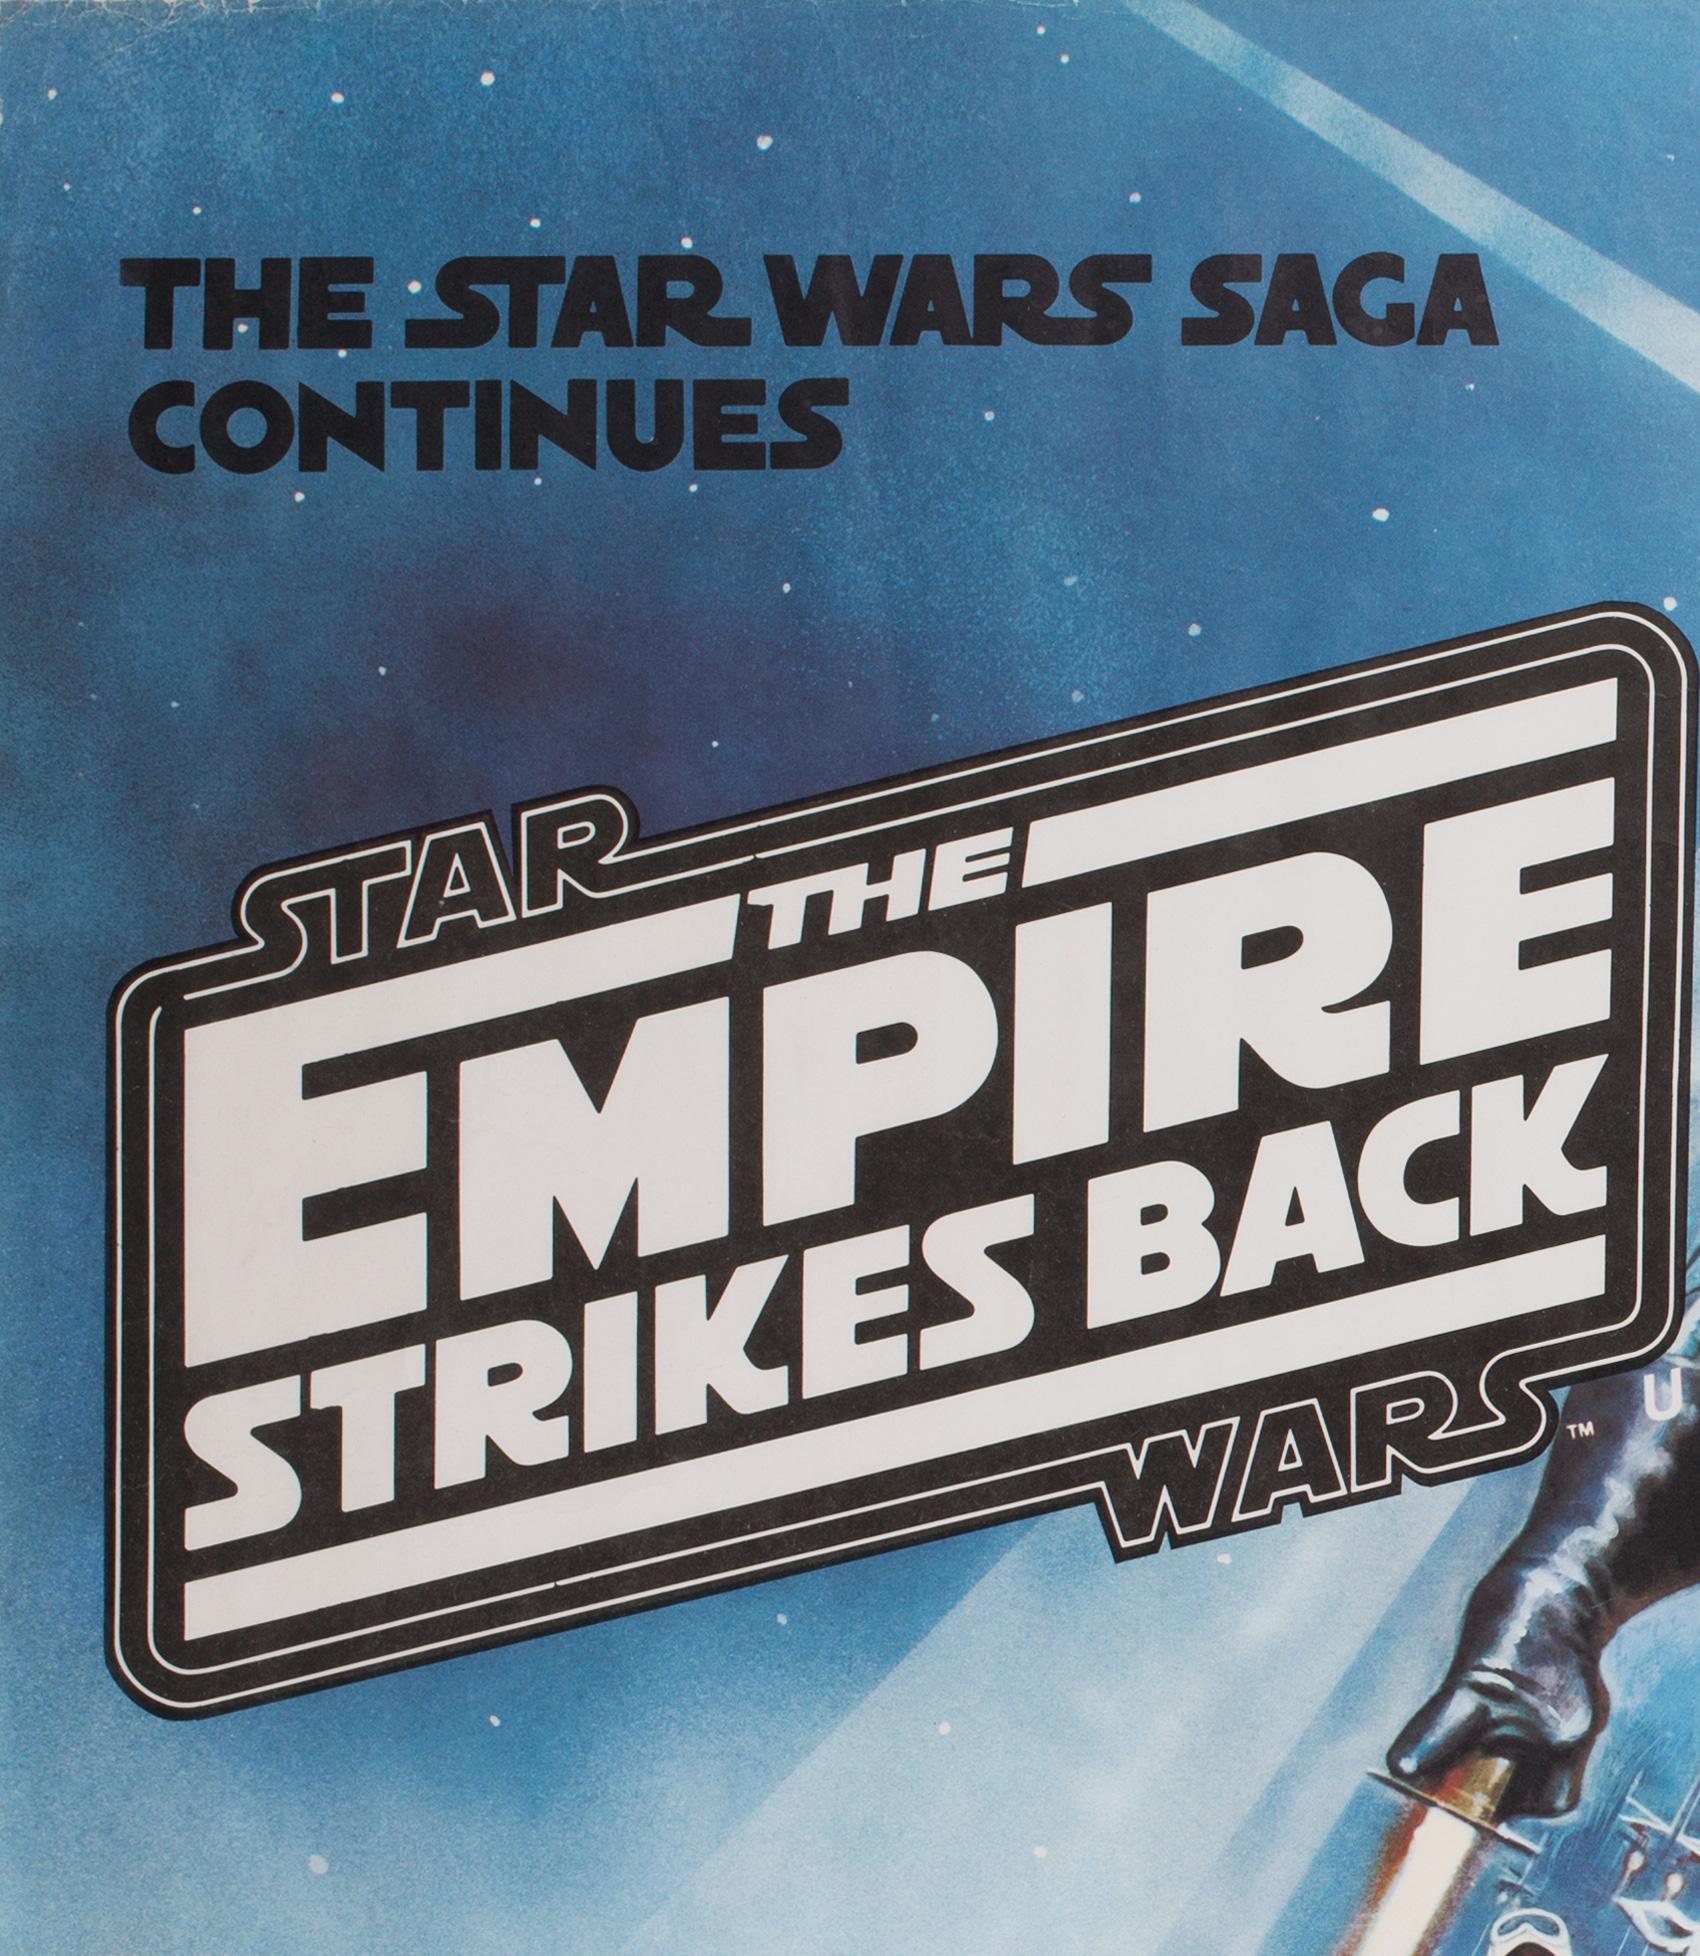 where was the empire strikes back filmed